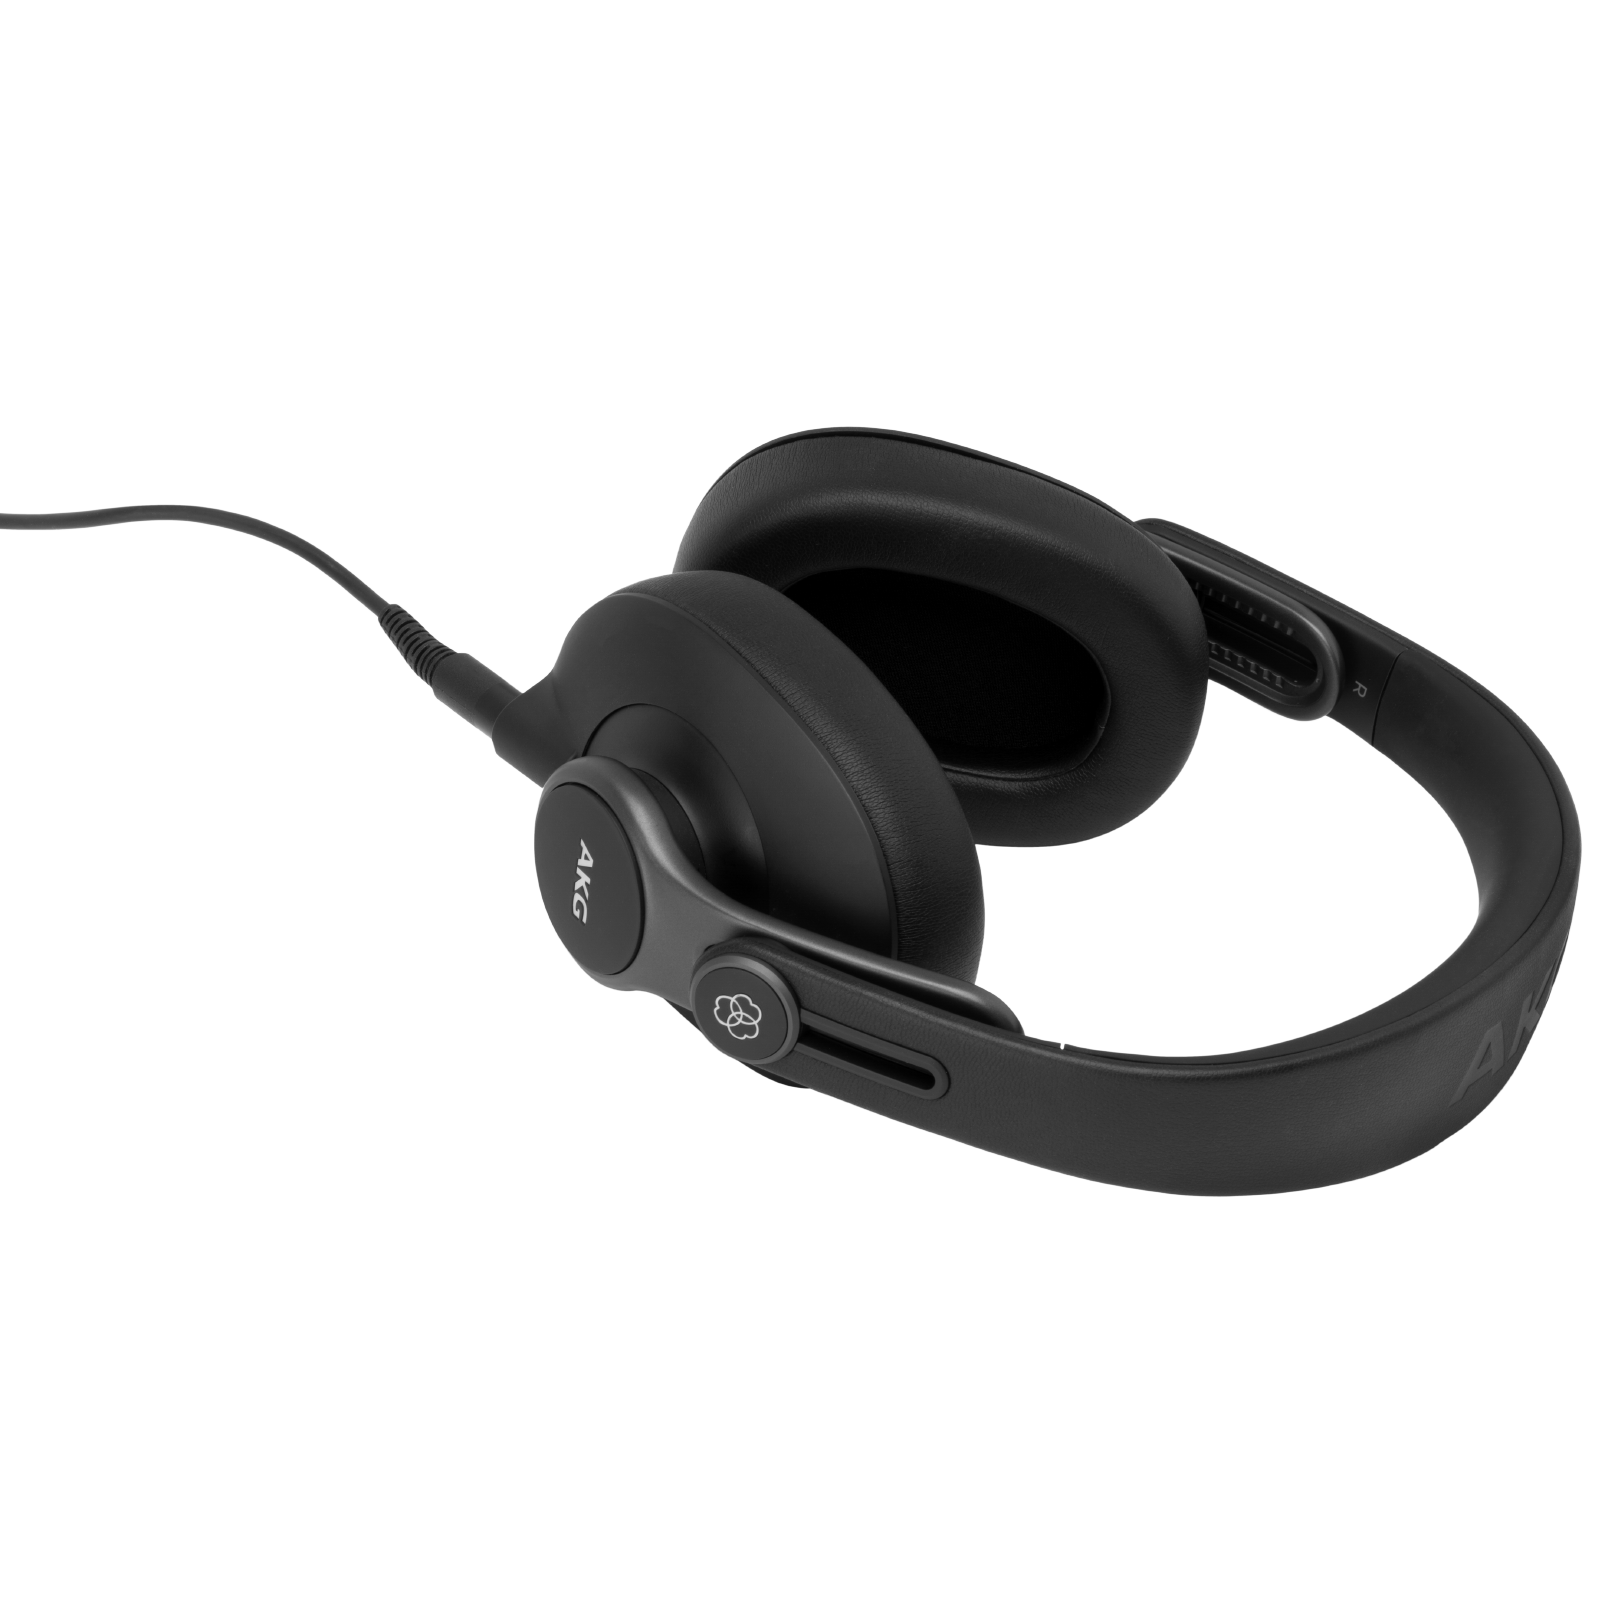 K371 - Black - Over-ear, closed-back, foldable studio headphones  - Detailshot 3